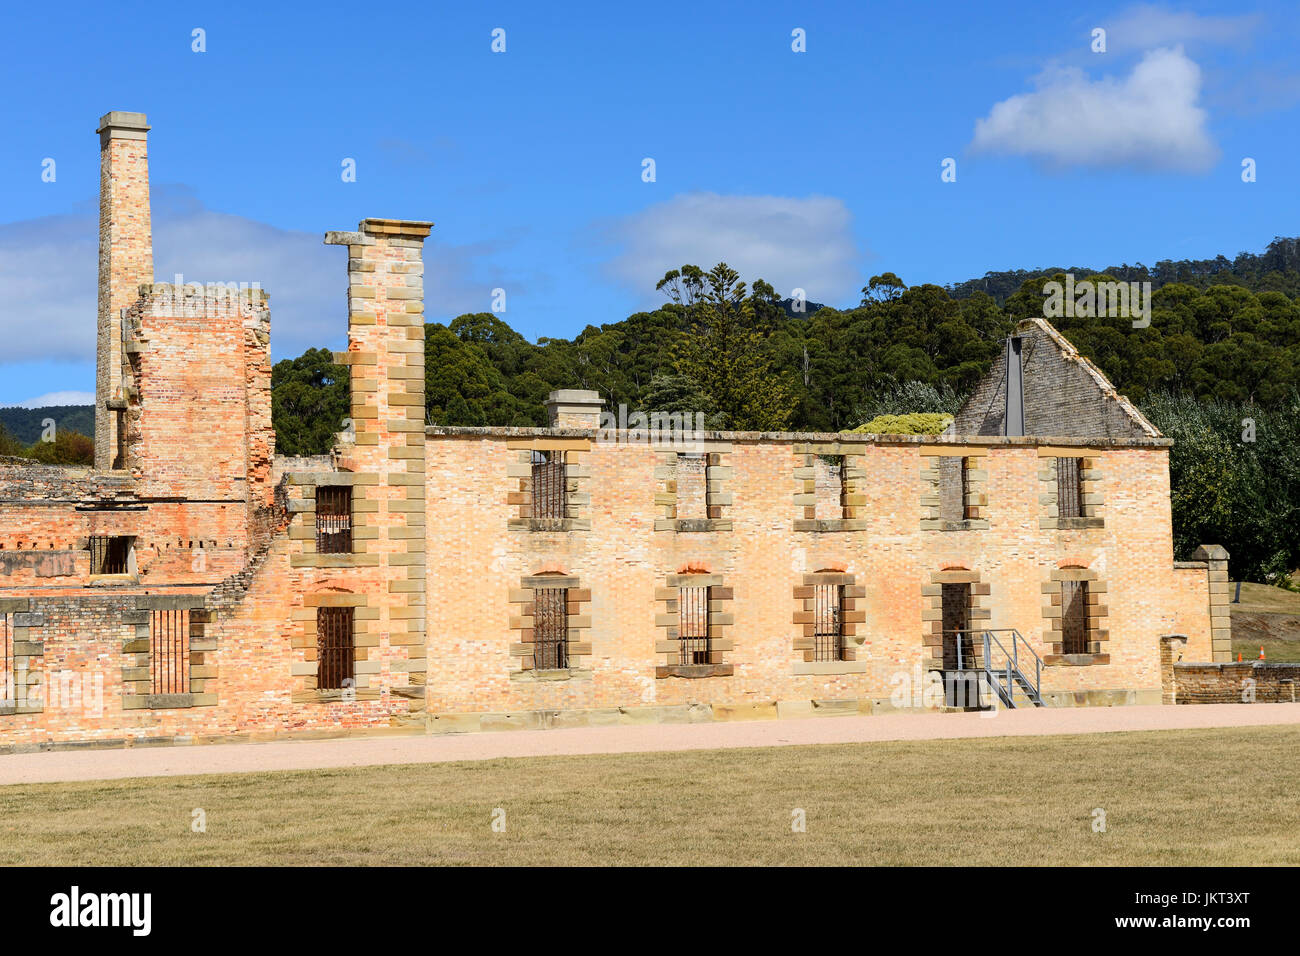 The Penitentiary at Port Arthur historic site (former convict settlement) on the Tasman Peninsula in Tasmania, Australia Stock Photo